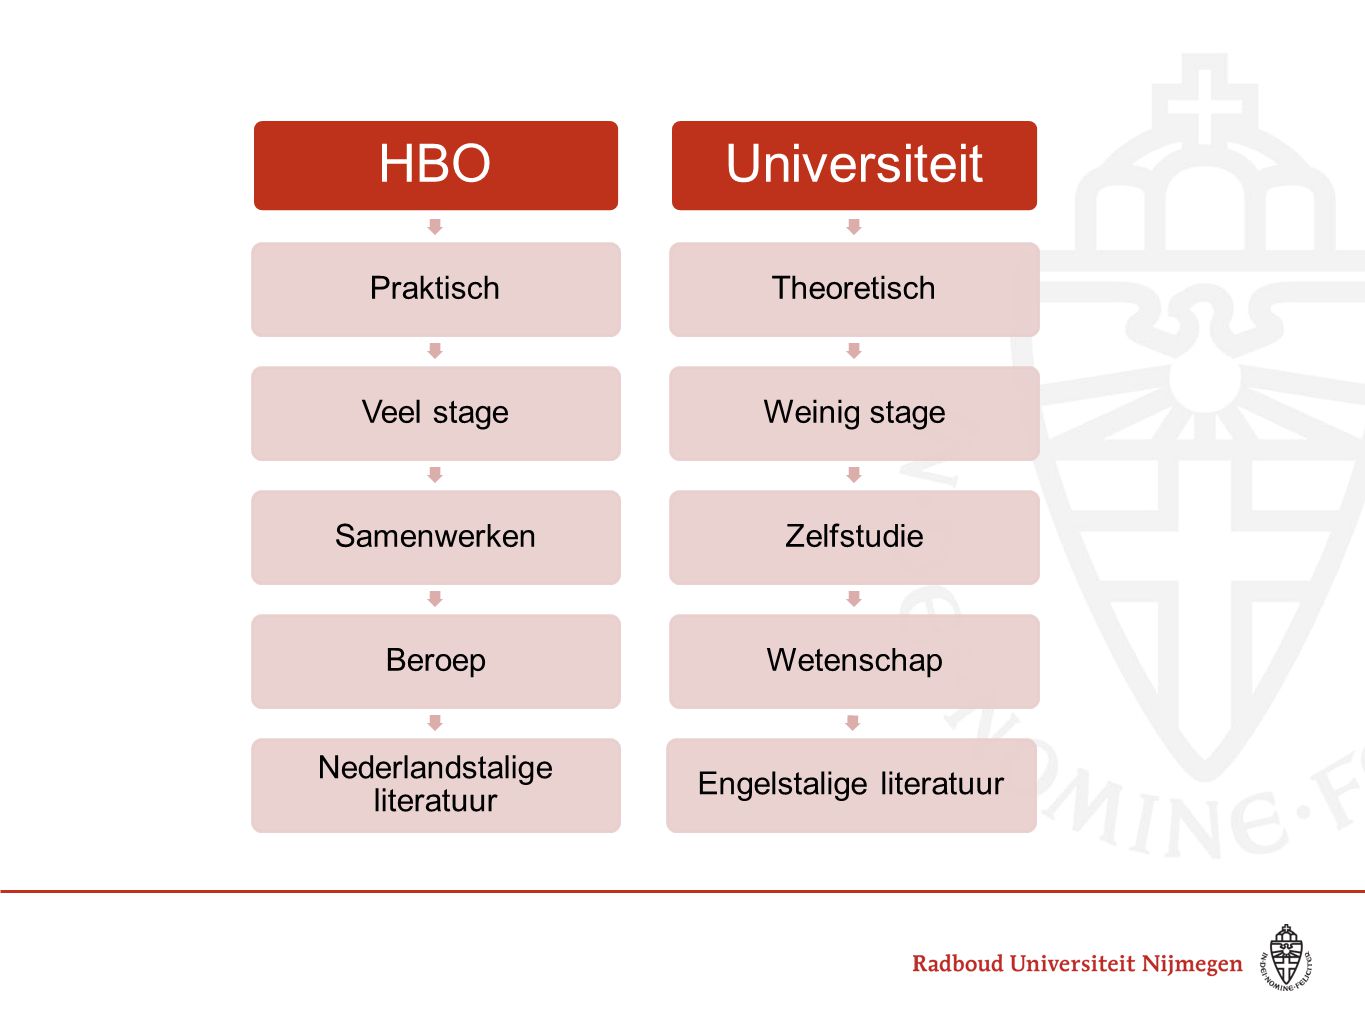 HBO PraktischVeel stageSamenwerkenBeroep Nederlandstalige literatuur Universiteit TheoretischWeinig stageZelfstudieWetenschapEngelstalige literatuur